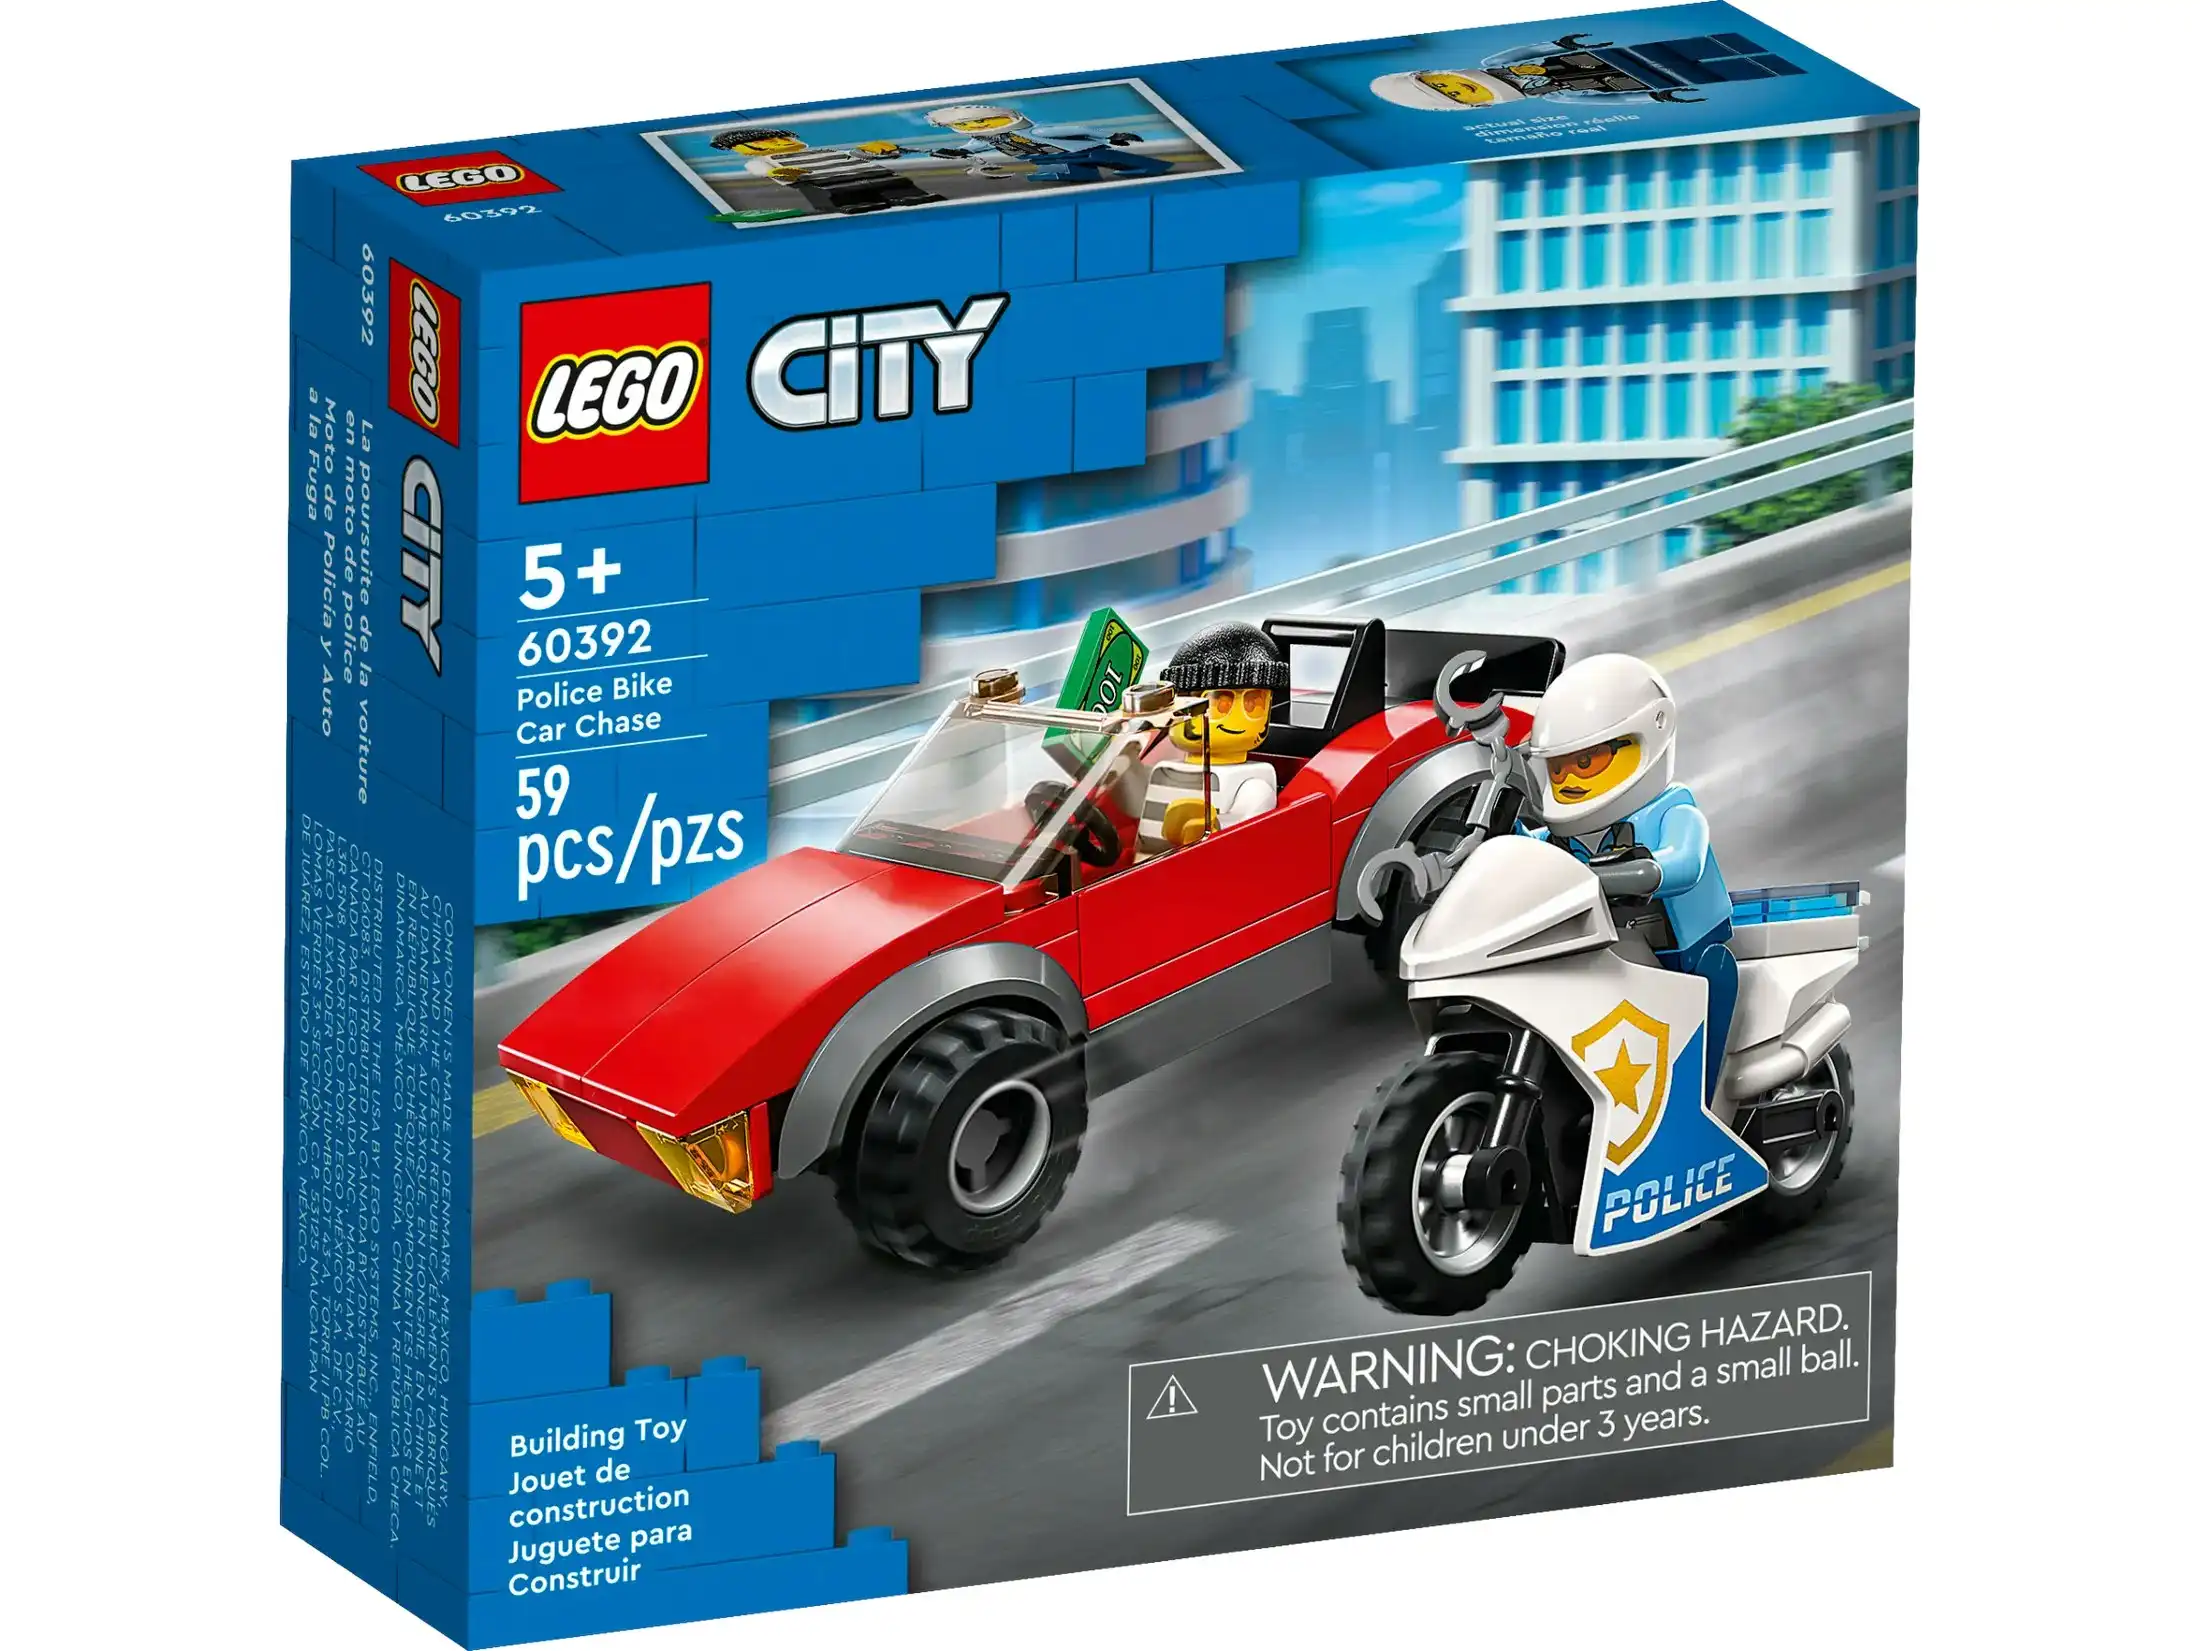 LEGO 60392 Police Bike Car Chase - City